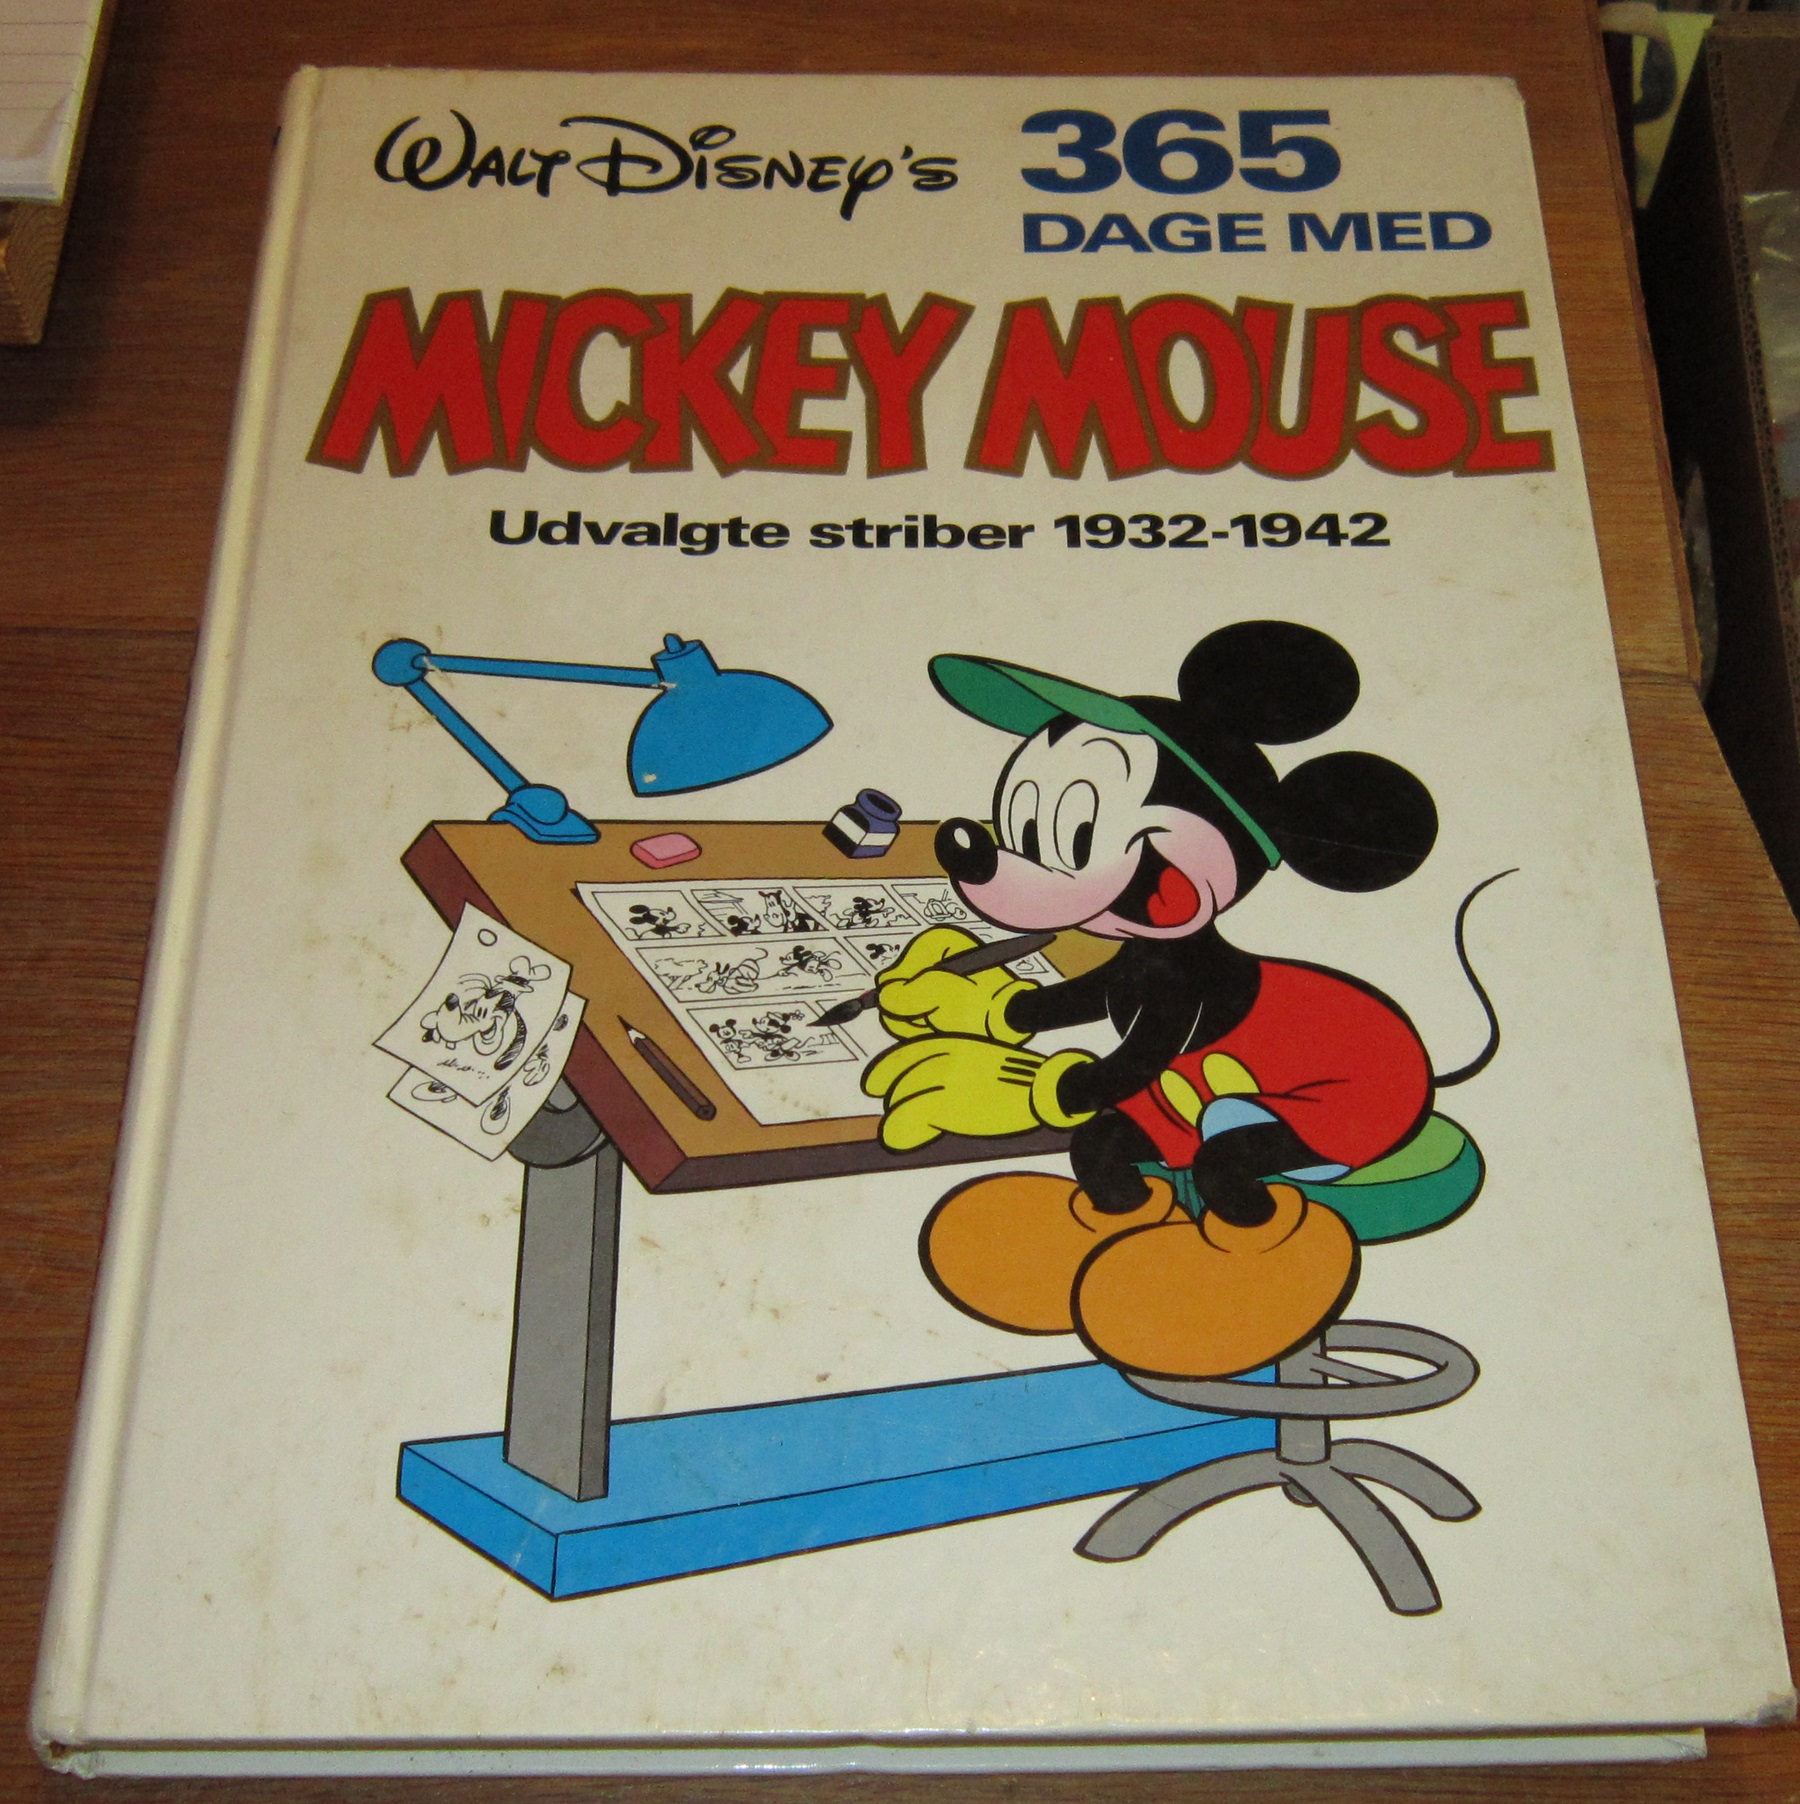 Walt Disney's 365 dage med Mickey Mouse